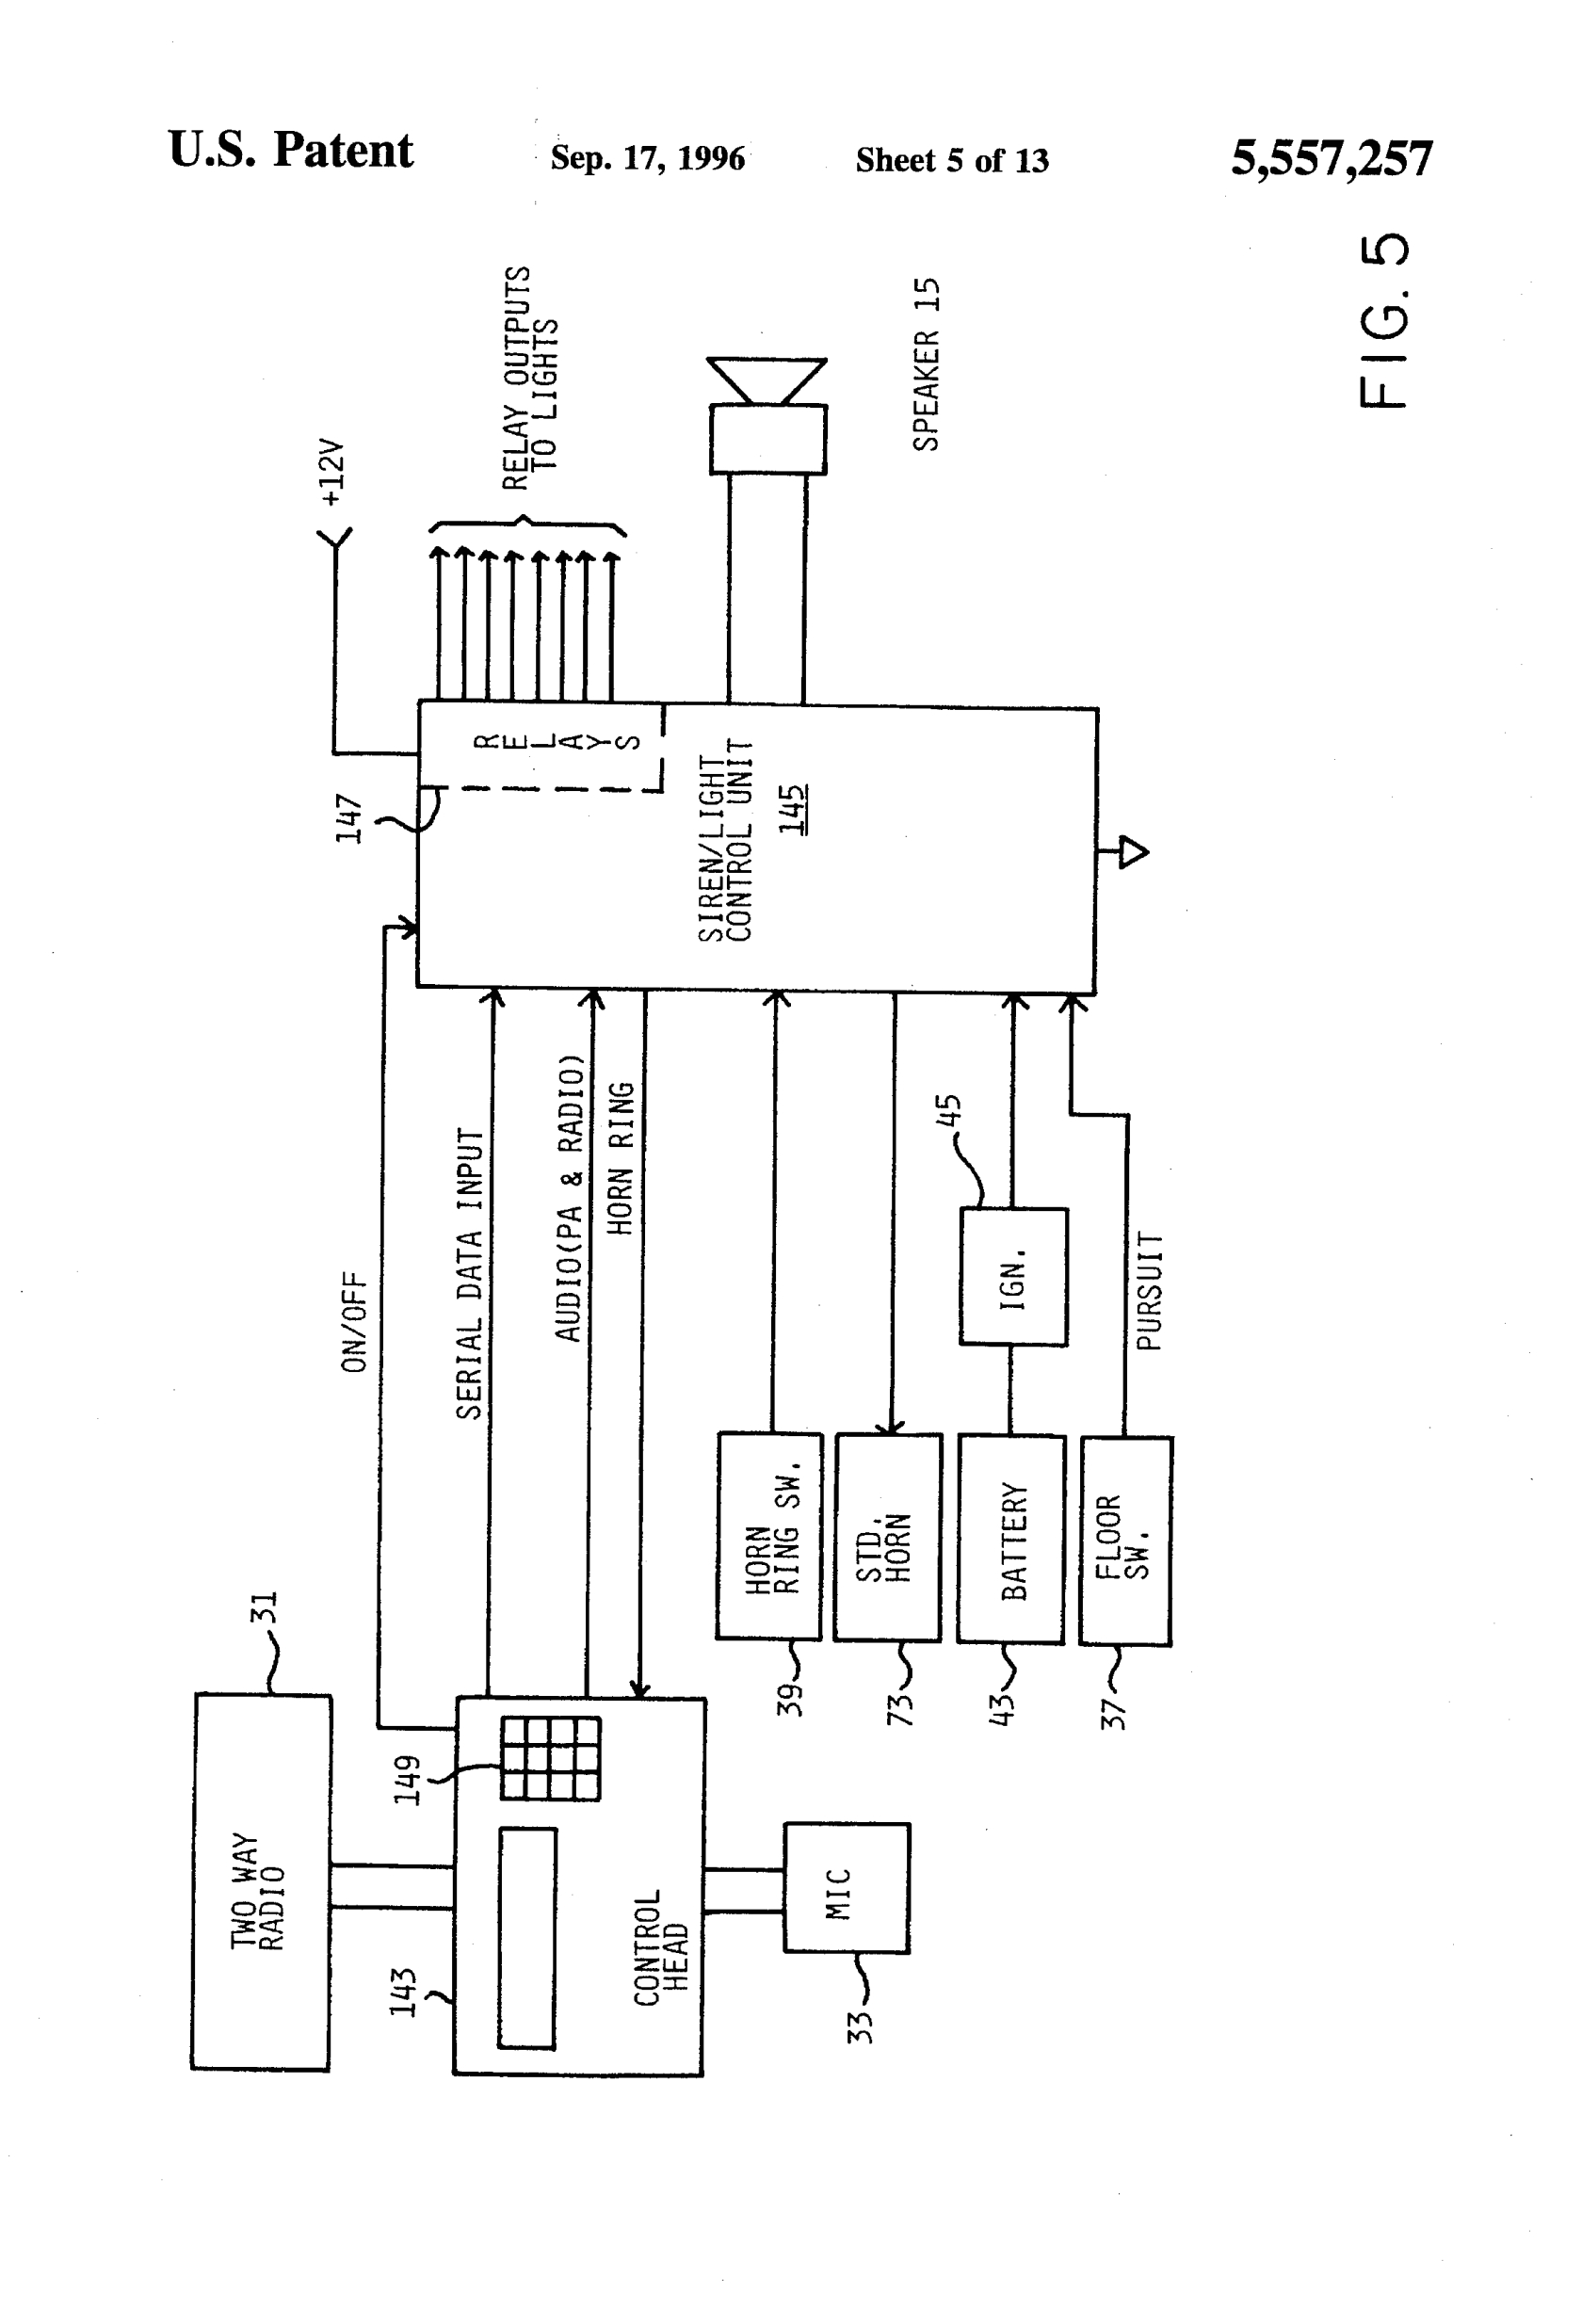 ls12 wiring diagram wiring diagrams bib 911ep ls12 wiring diagram ls12 wiring diagram